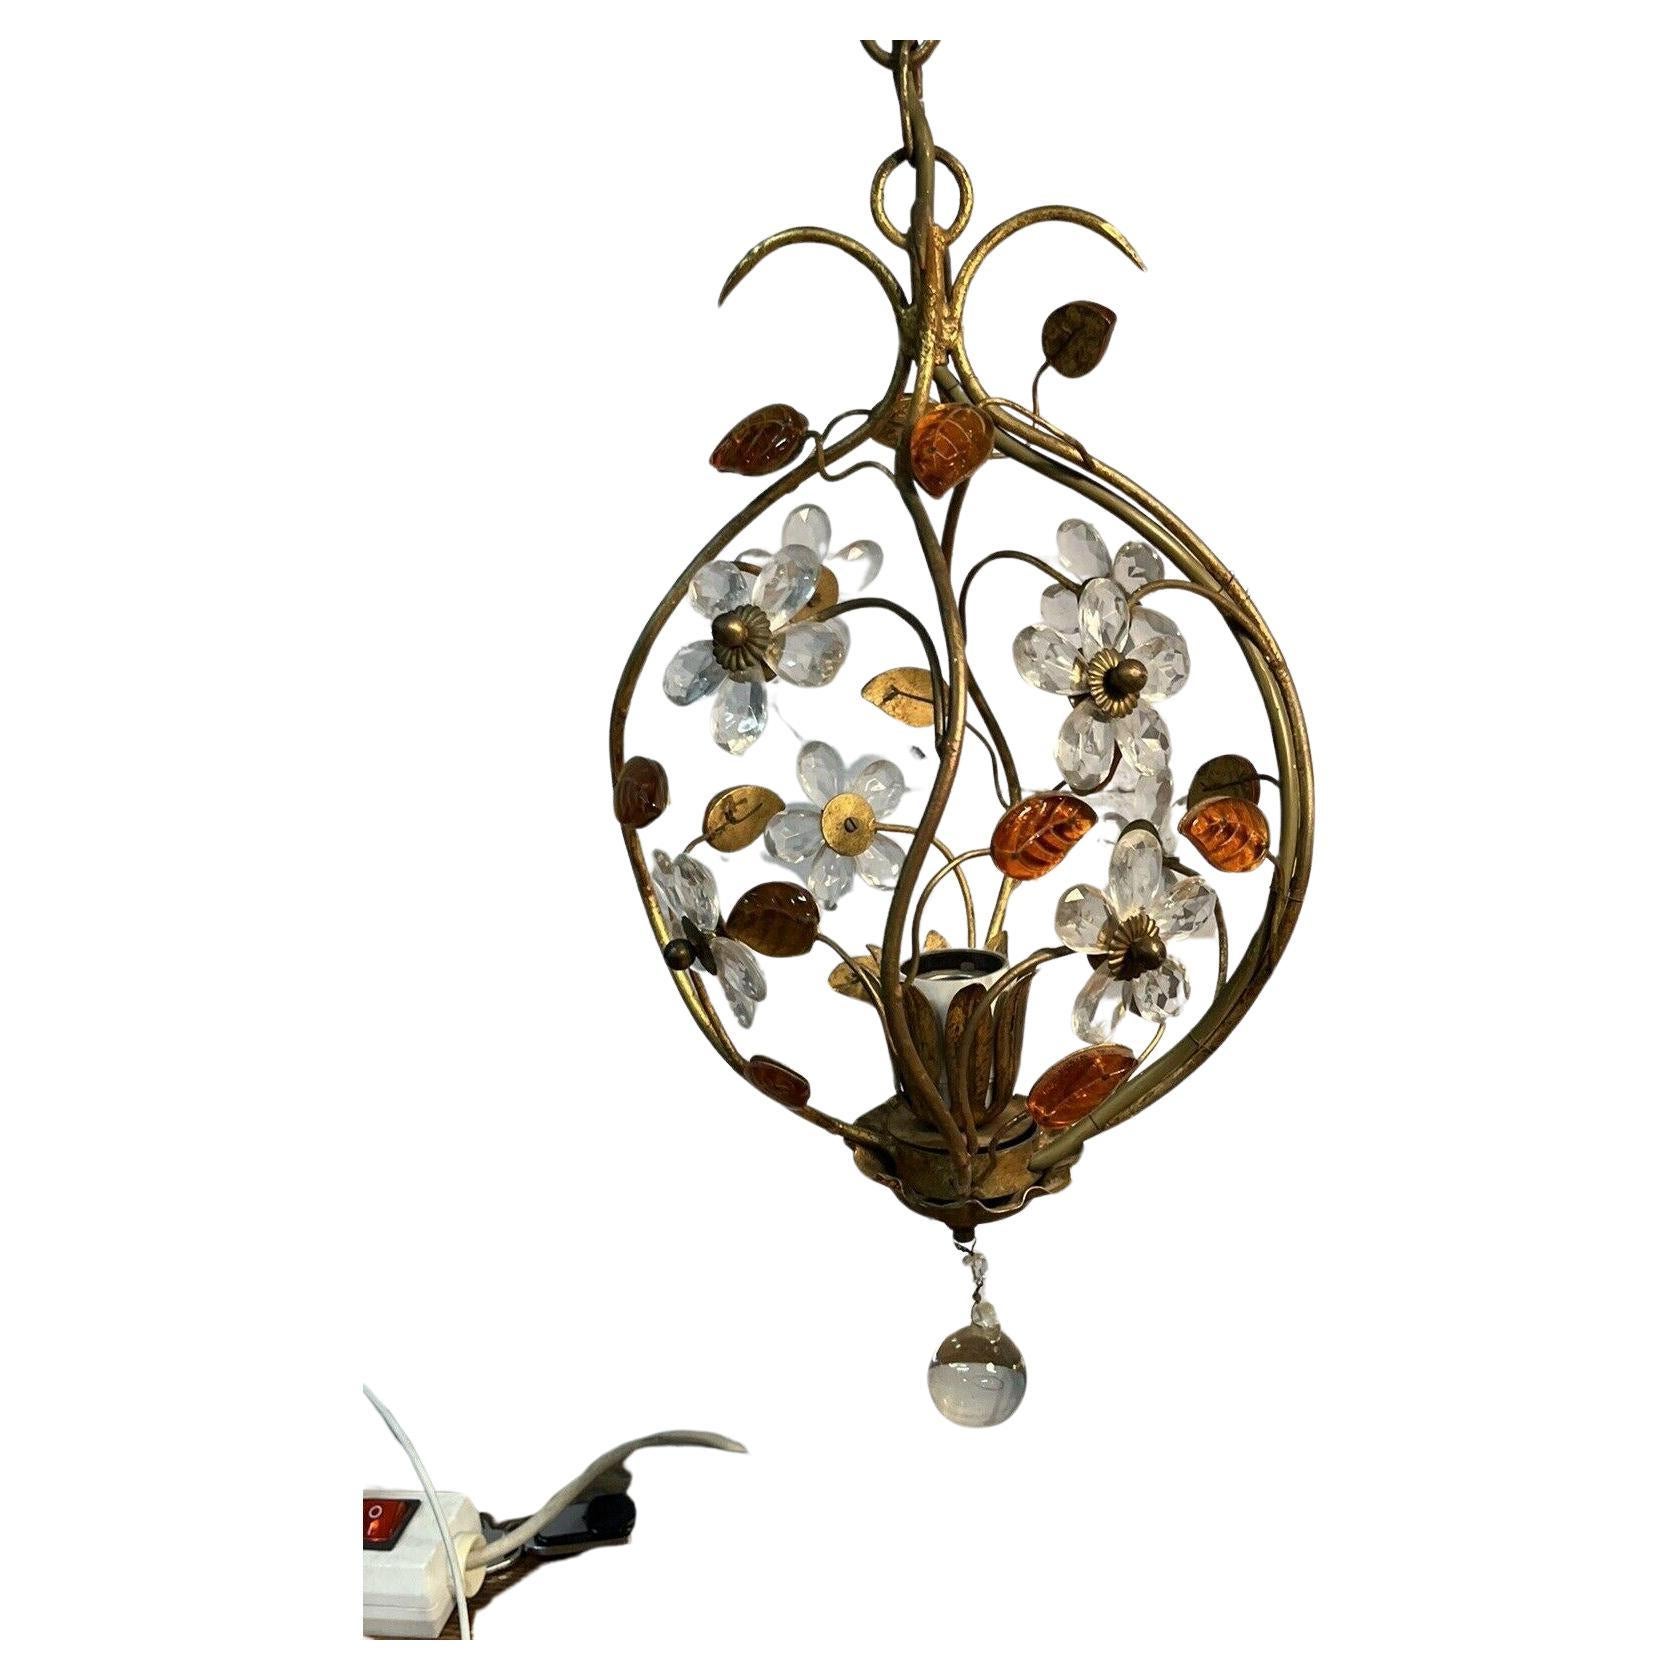 c1950's Italian Regency Crystal Flower and Petal Hanging Lantern by Banci Firenze. Beautiful lighting from Banci.